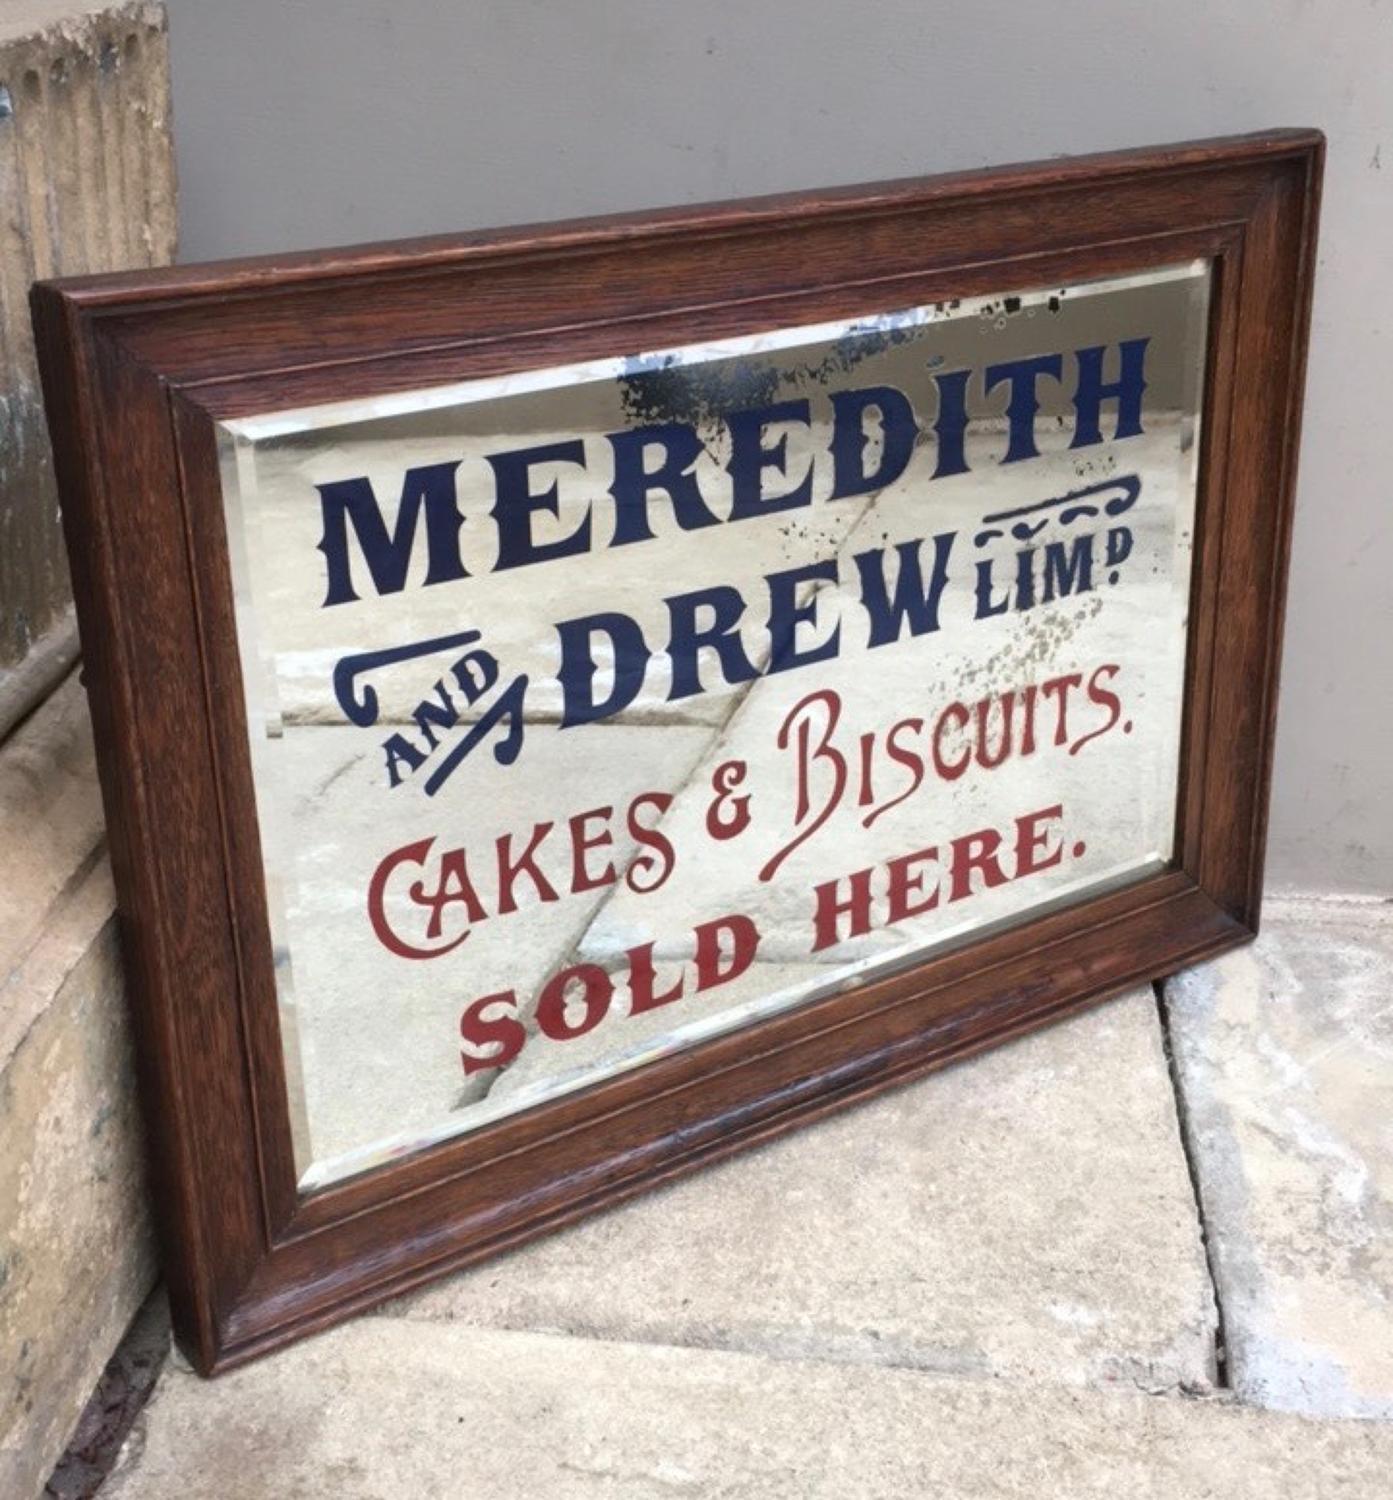 Rare Edwardian Advertising Mirror - Meredith & Drew Ltd Cakes & Biscui